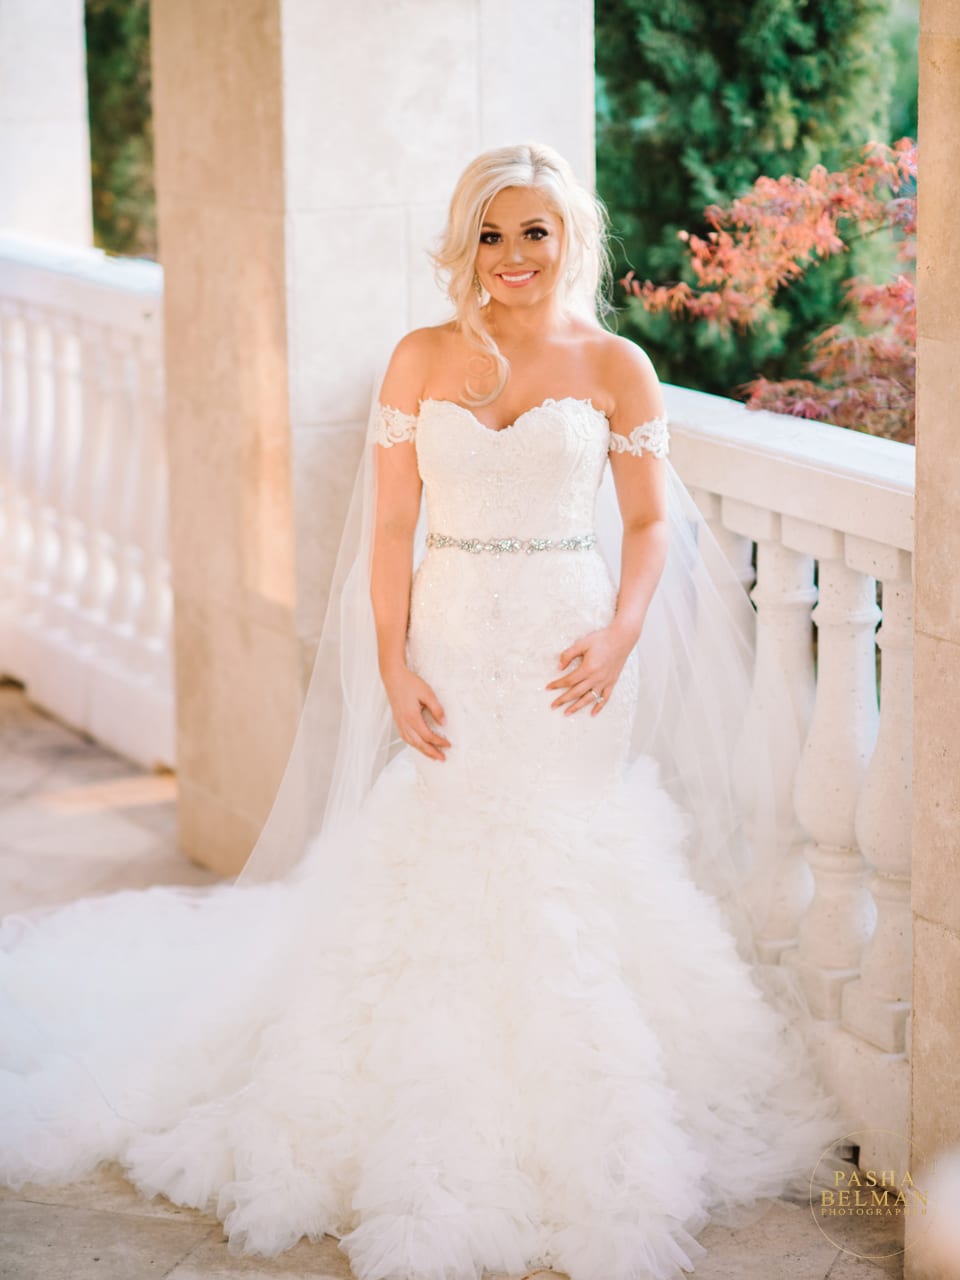 Amazing bridal wedding portraits in South Carolina by top Charleston Wedding Photographer